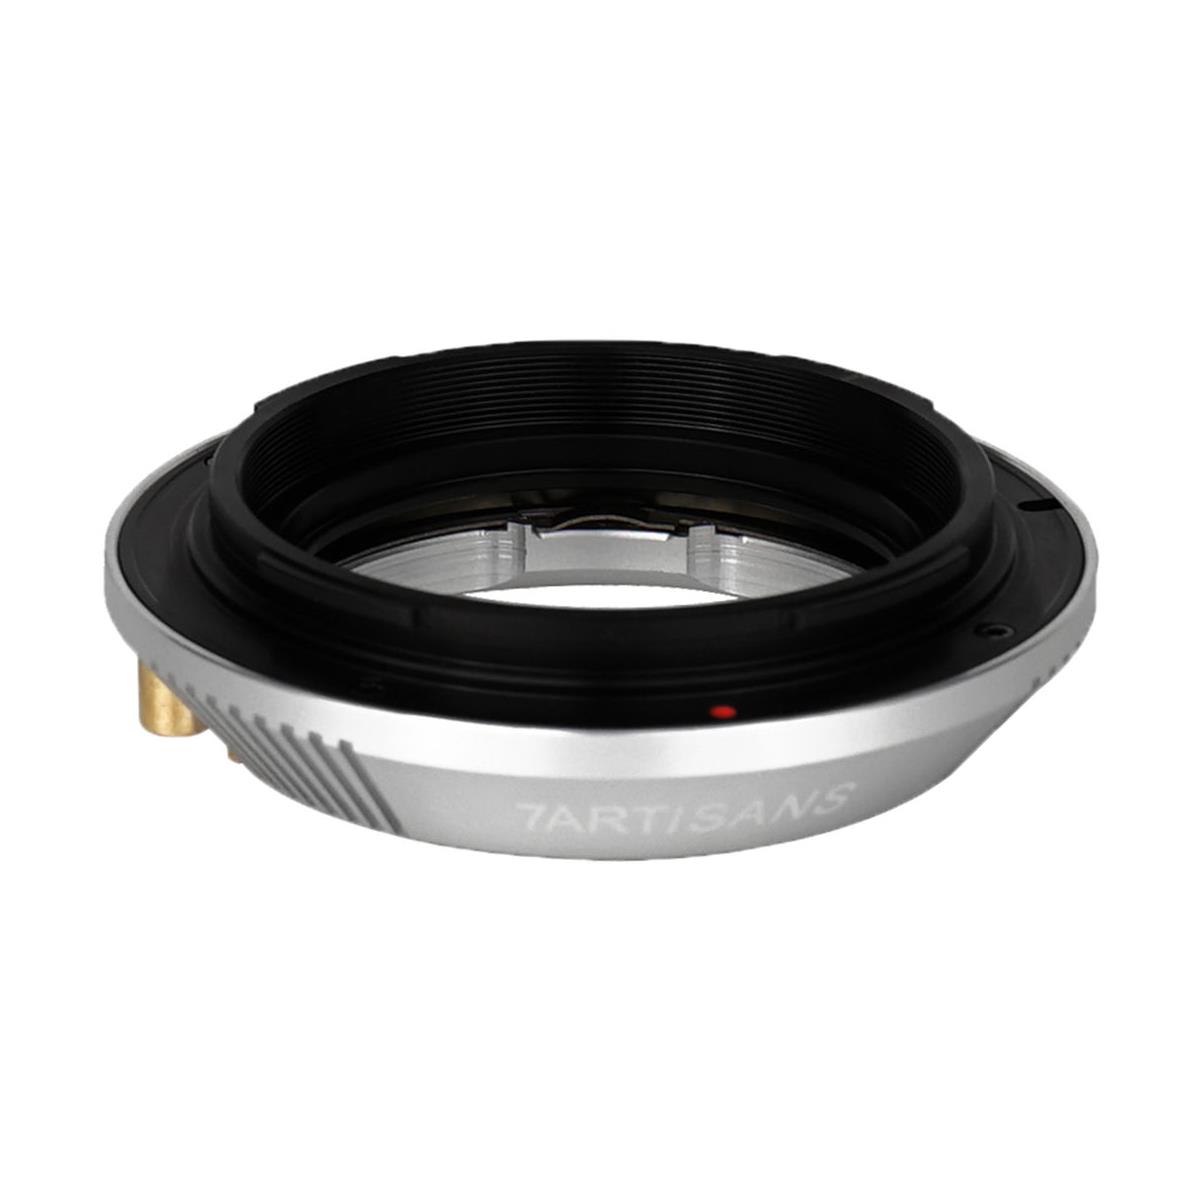 Image of 7artisans Leica Transfer Ring for Canon EOS-R